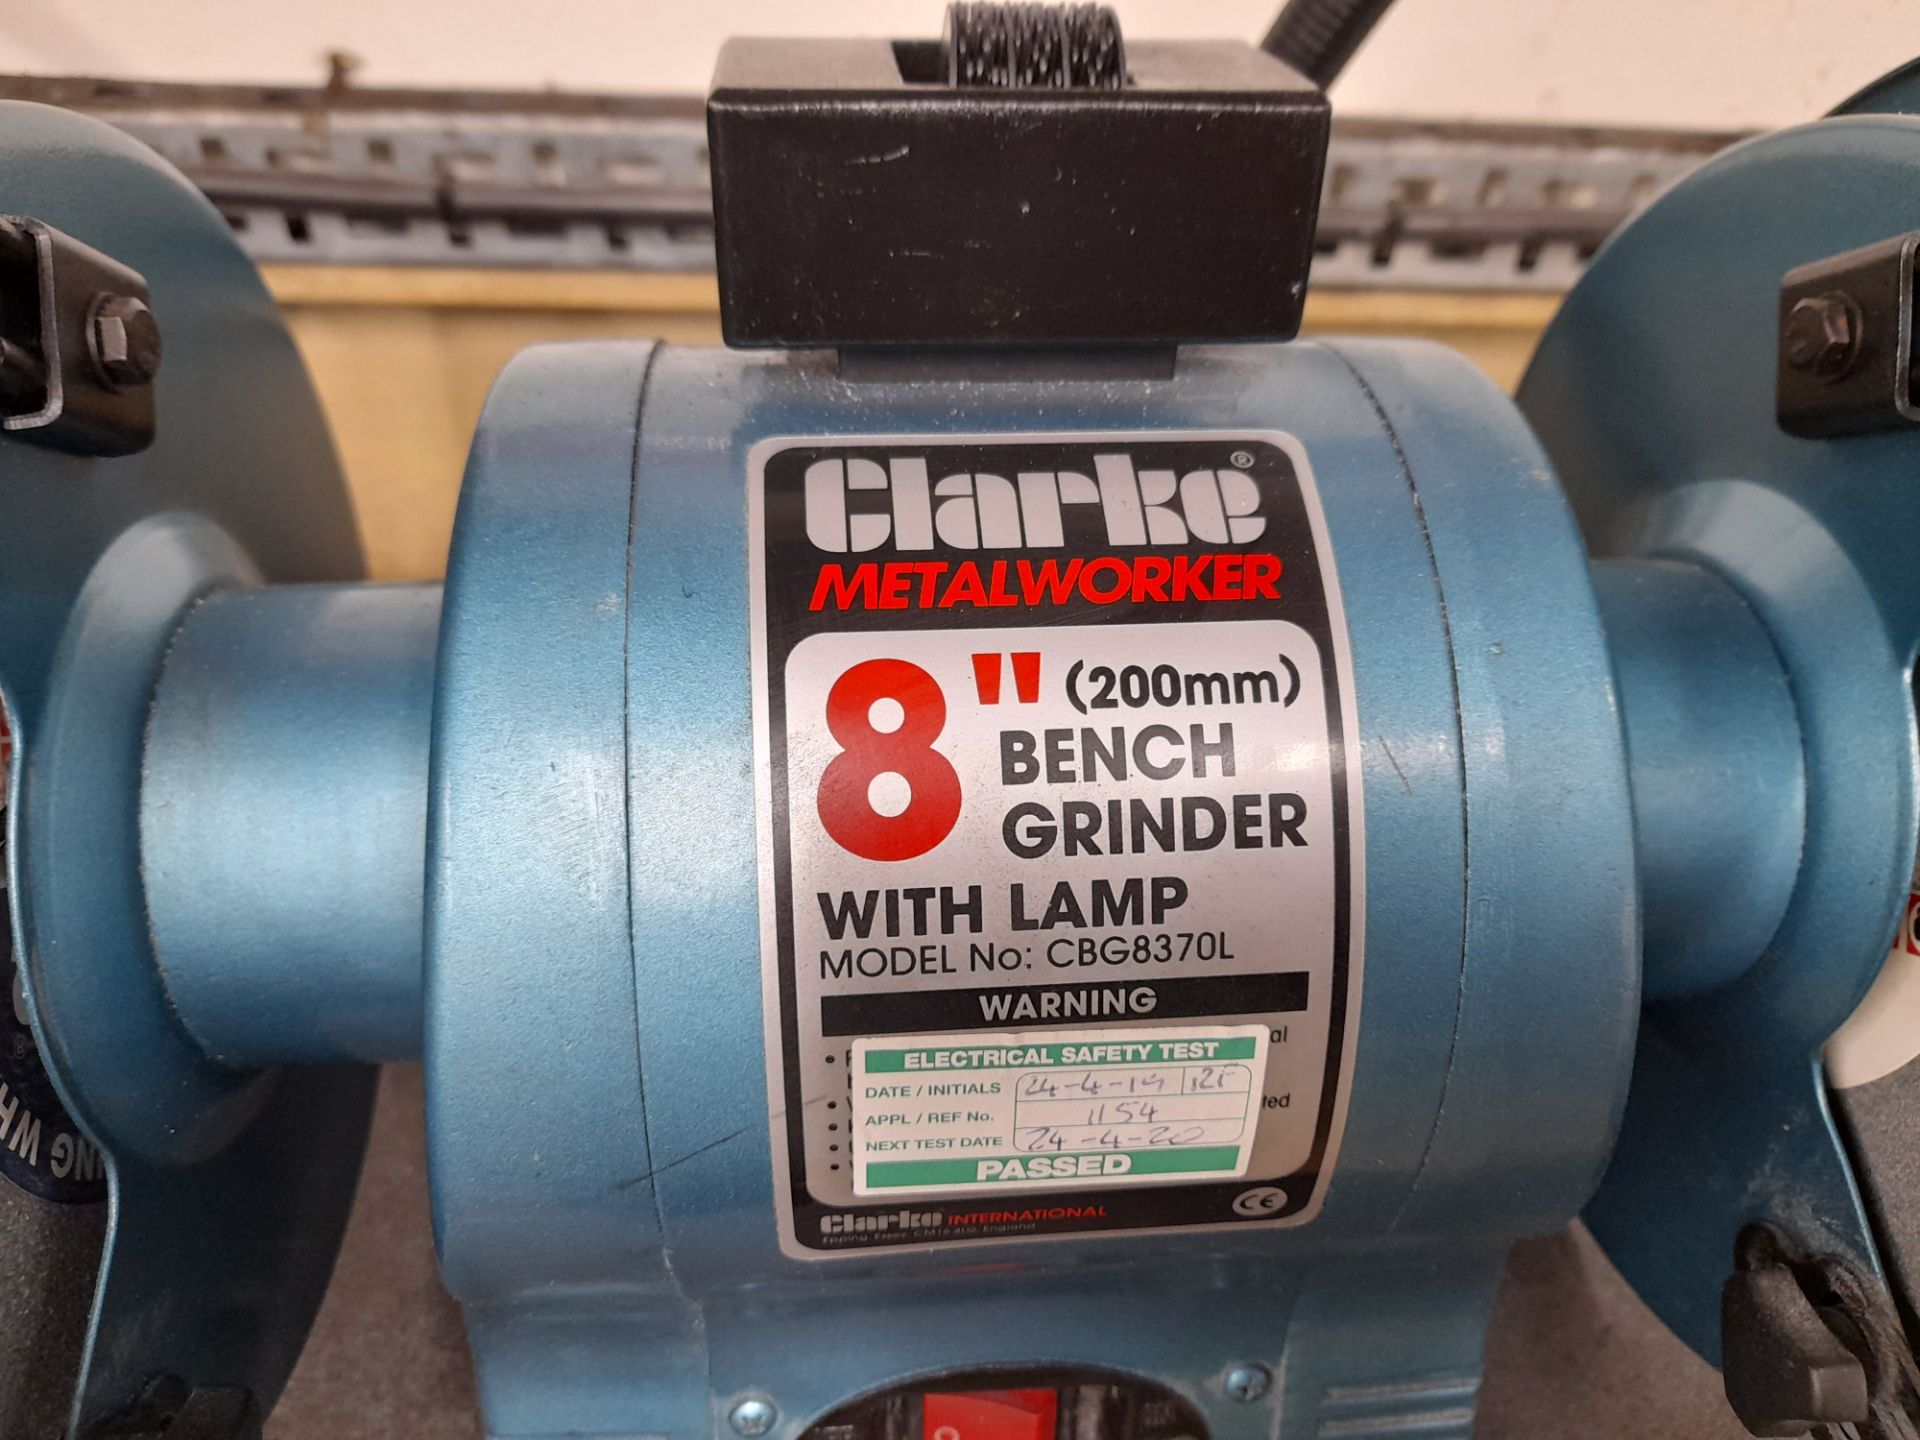 Clarke 8” (200mm) bench grinder with lamp (Model Number CBG8370L) - Image 2 of 3